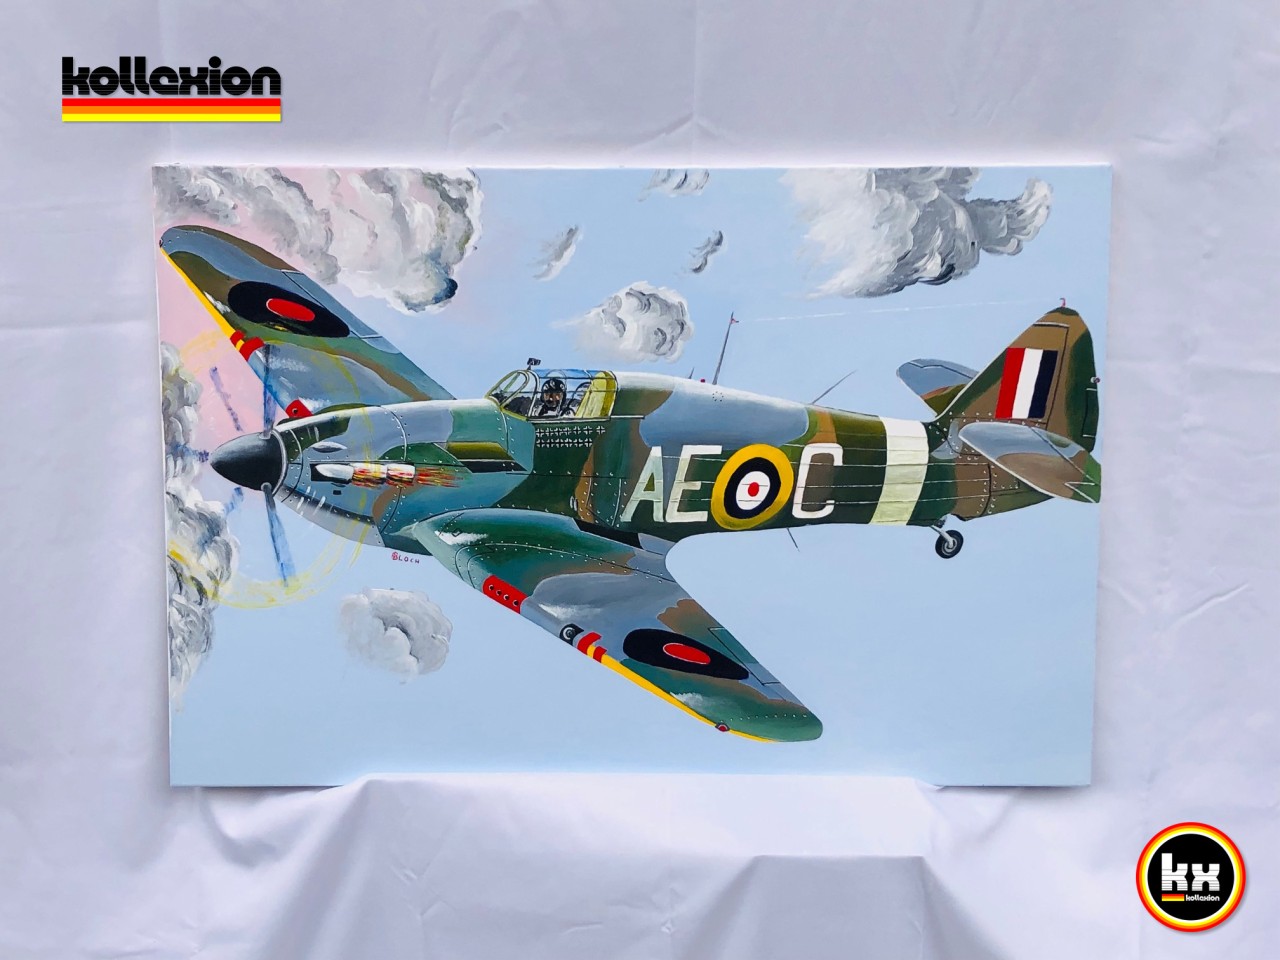 Painting RB 70 Hawker Hurricane 90cm x 60cm